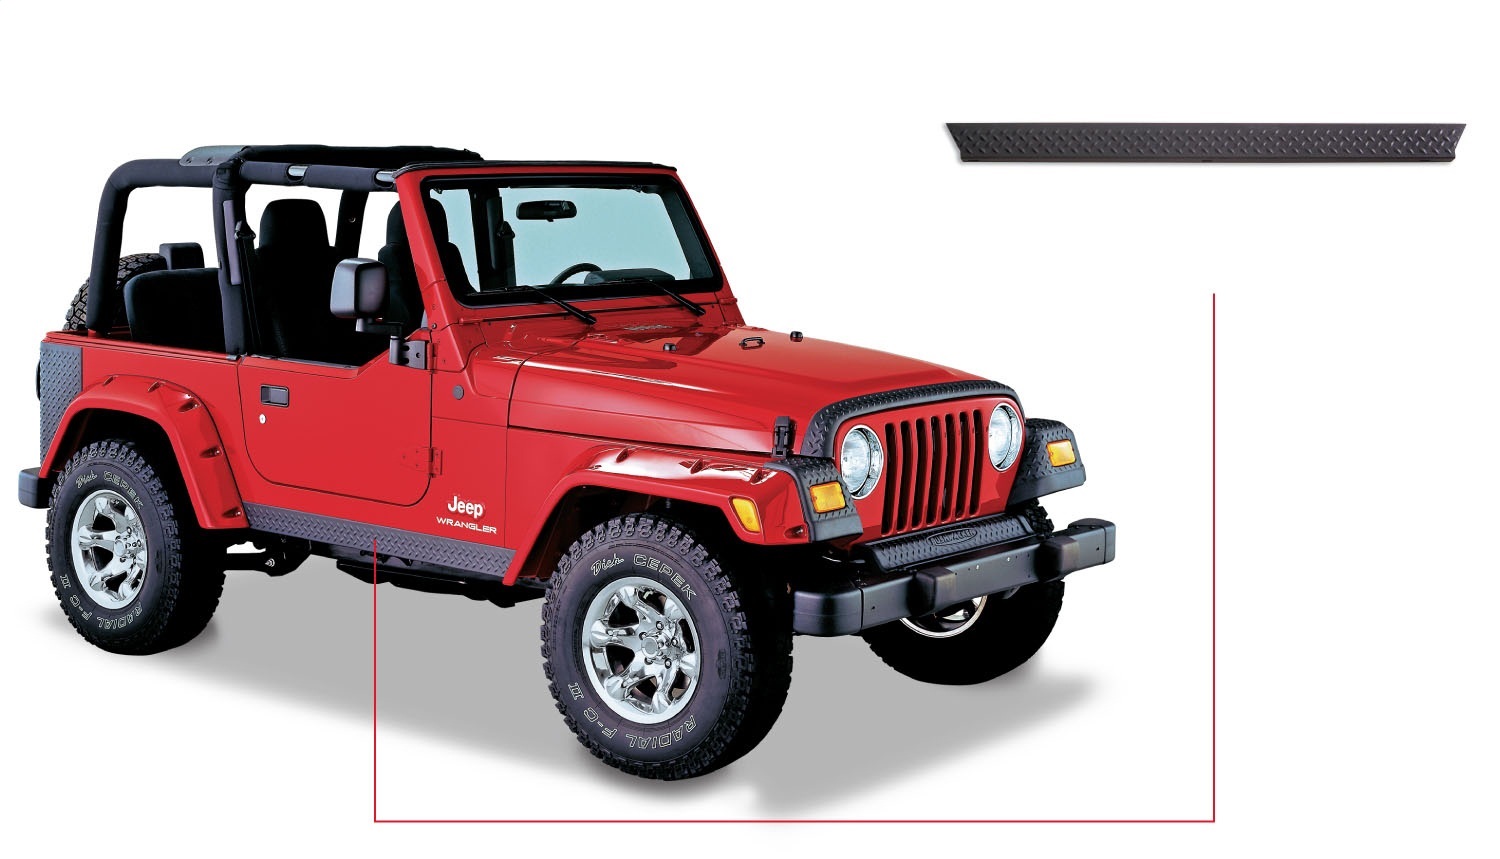 Bushwacker 14002 Pair Of Trail Armor Rocker Panels For 97-06 Jeep Wrangler  Tj 90689107312 | eBay